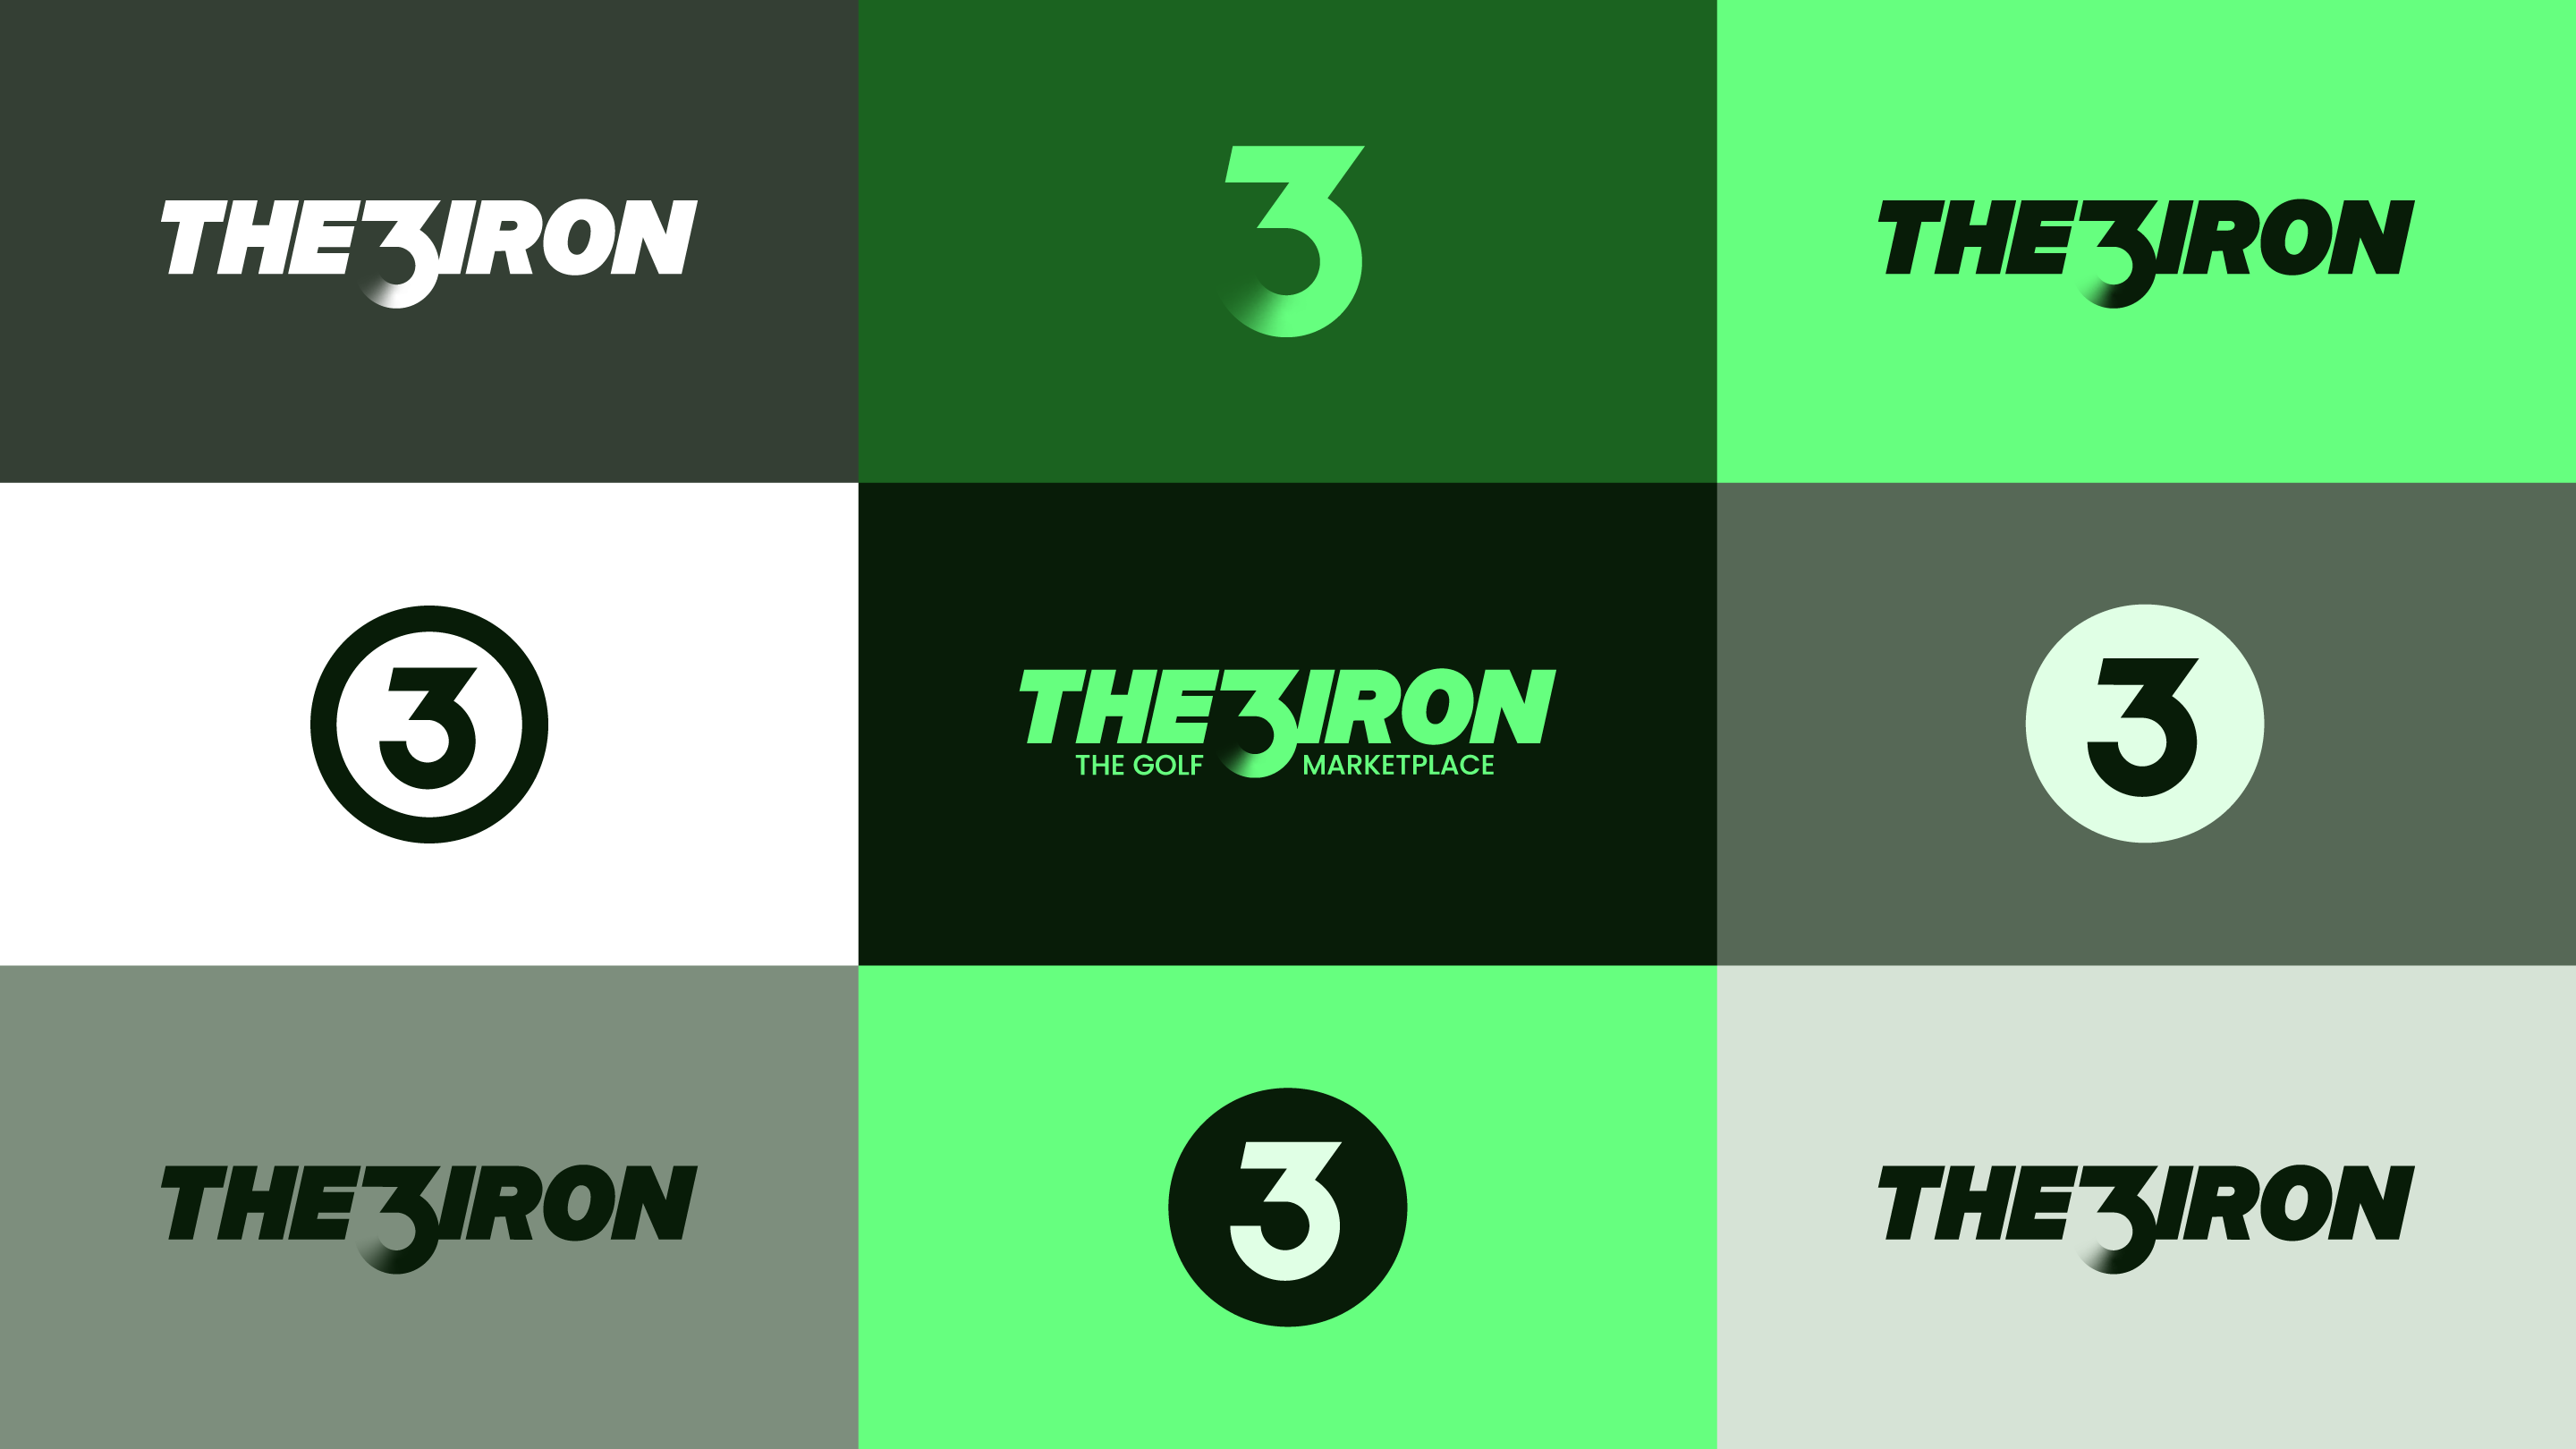 THE3IRON logo variants